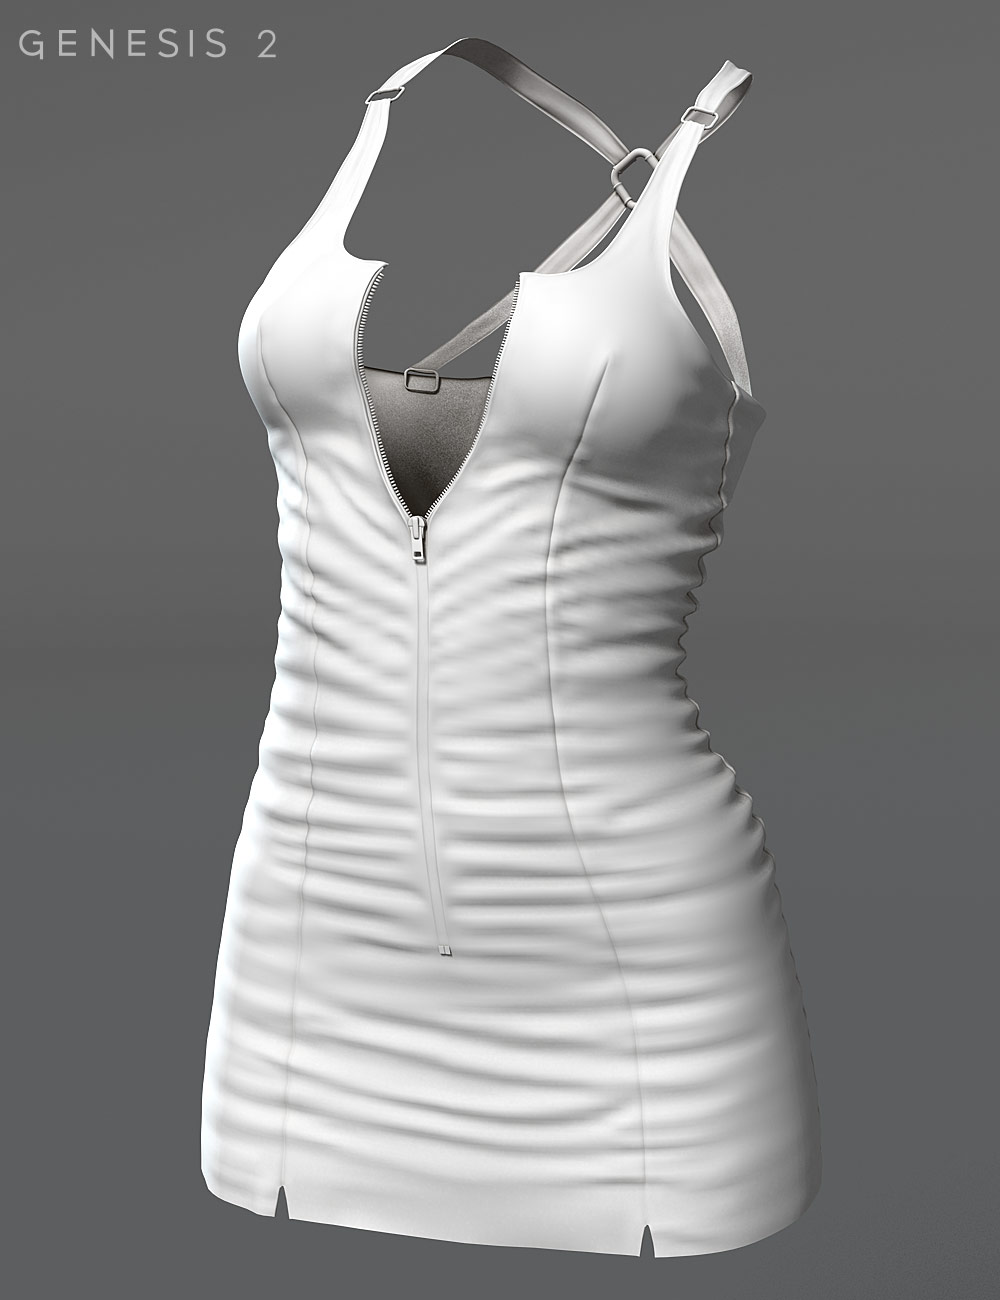 TEC5 for Genesis 2 Female(s) by: 4blueyes, 3D Models by Daz 3D